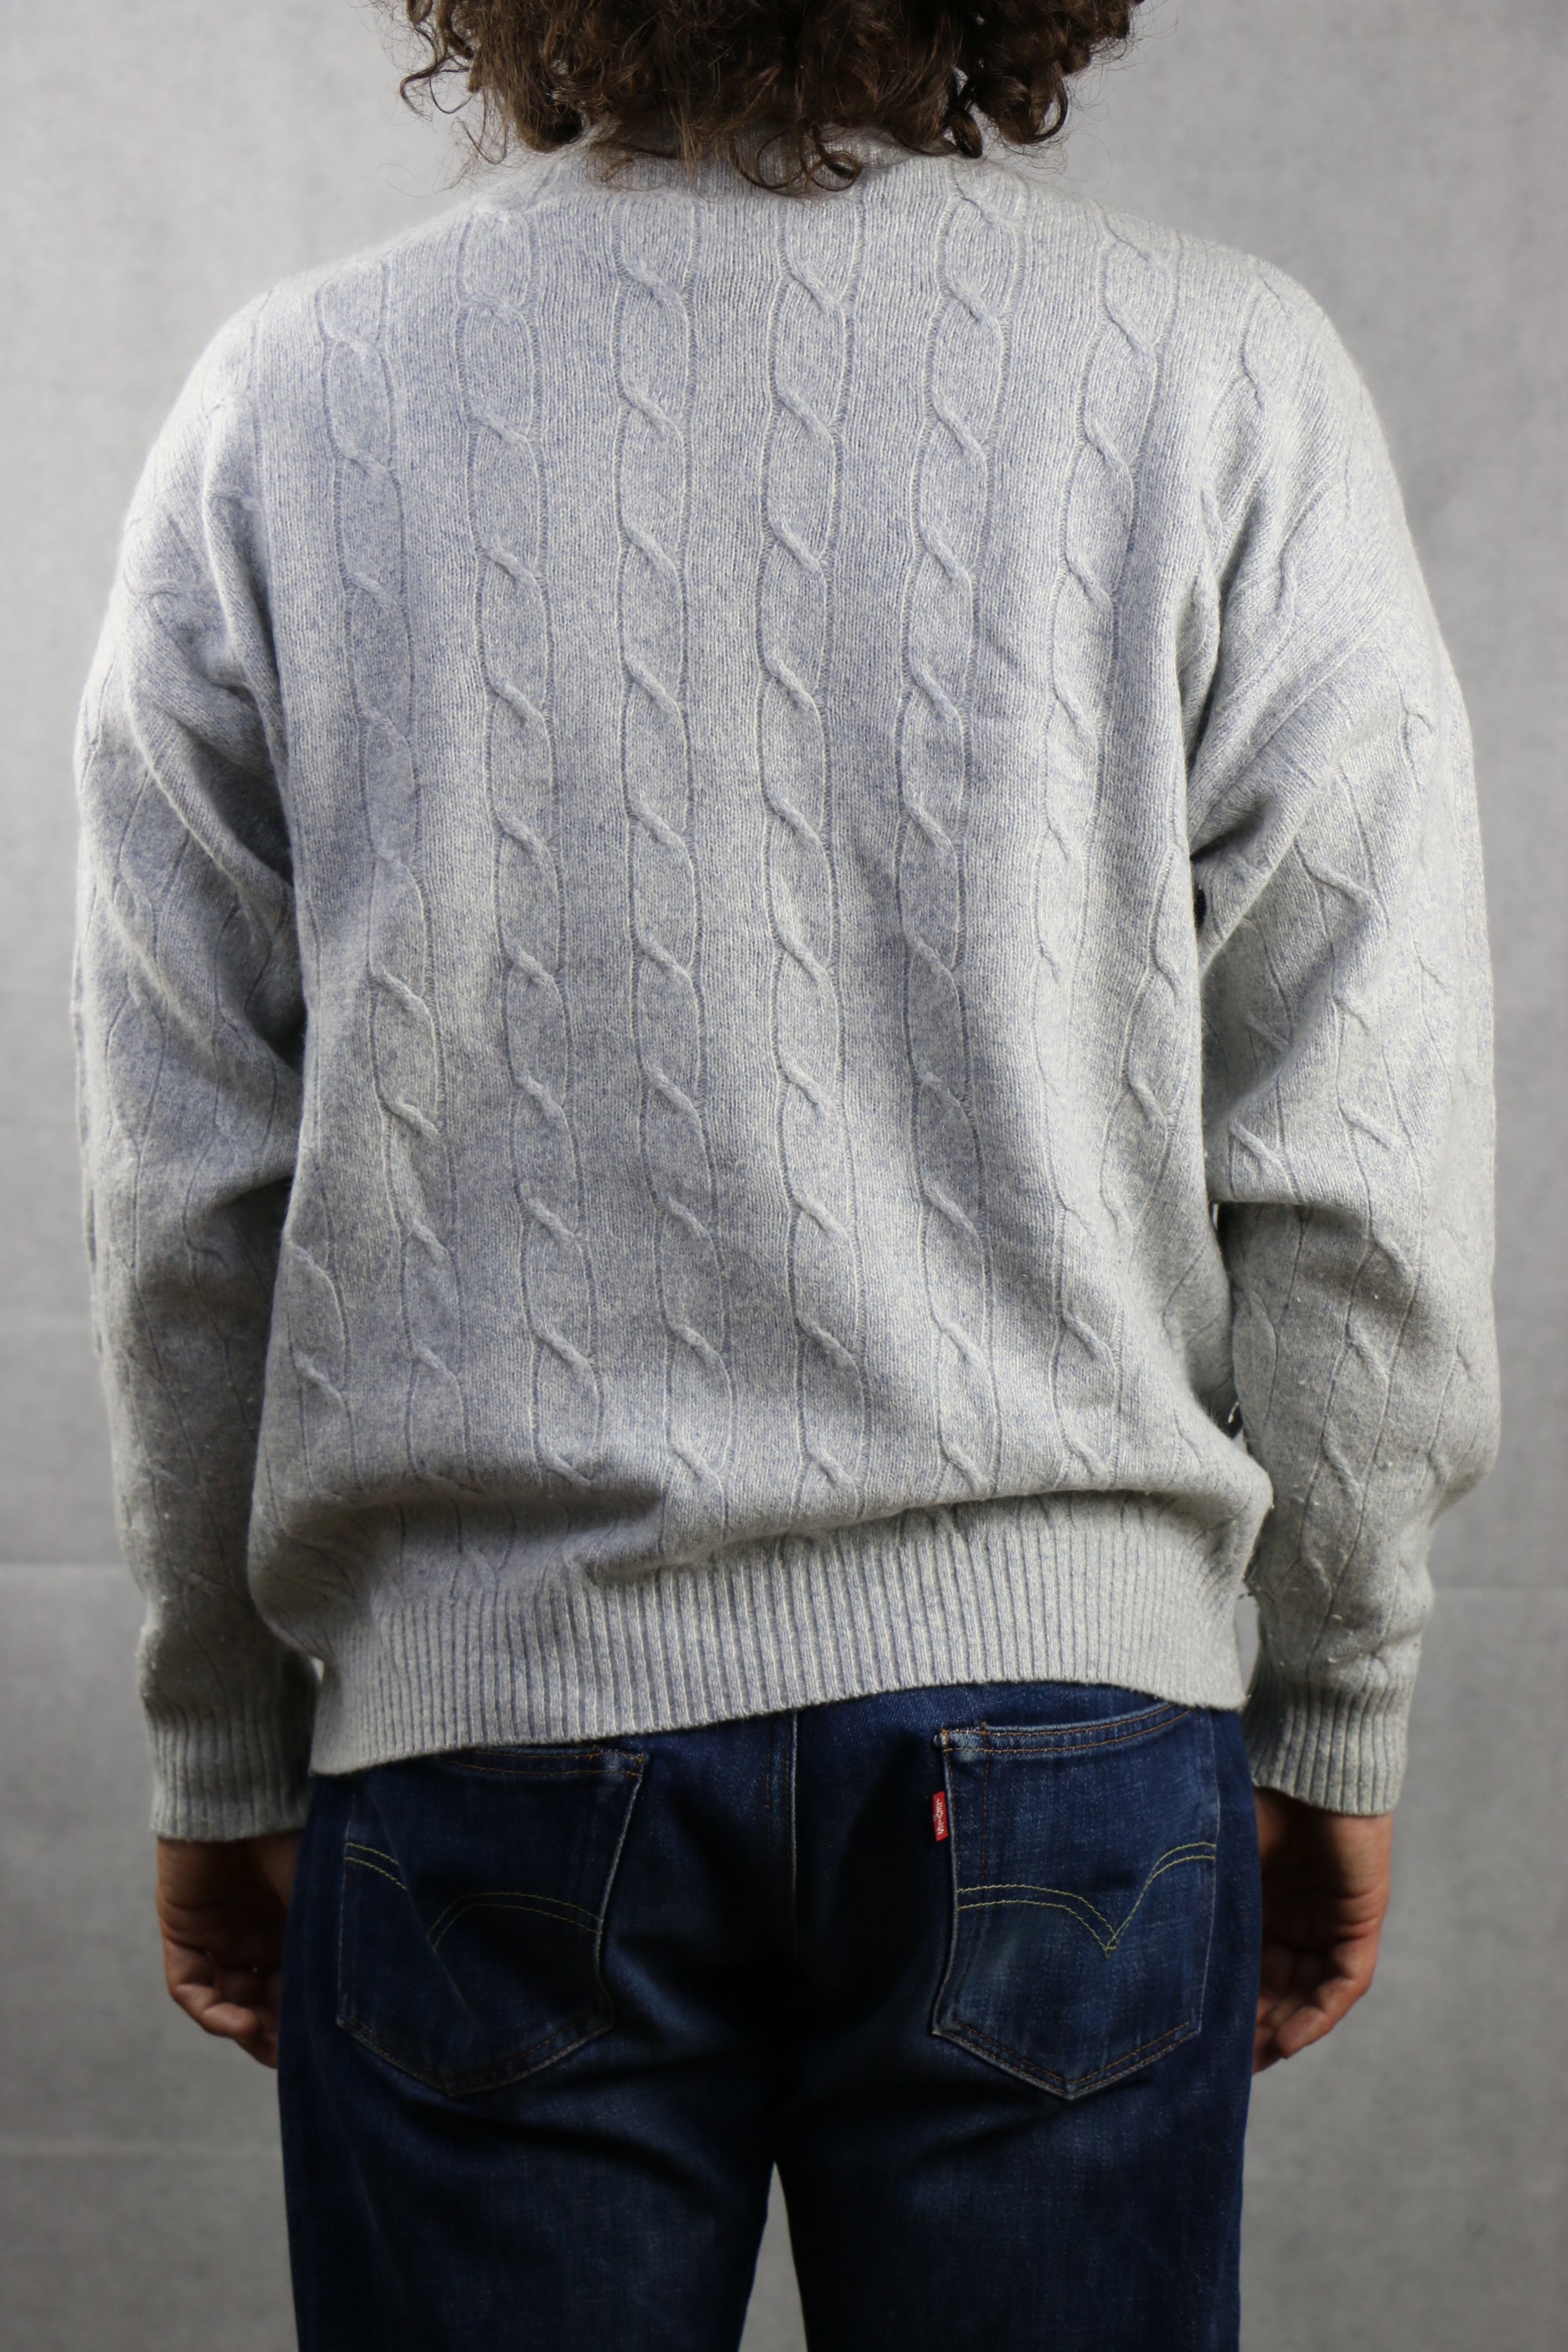 Burberrys' Gray Sweater - vintage clothing clochard92.com